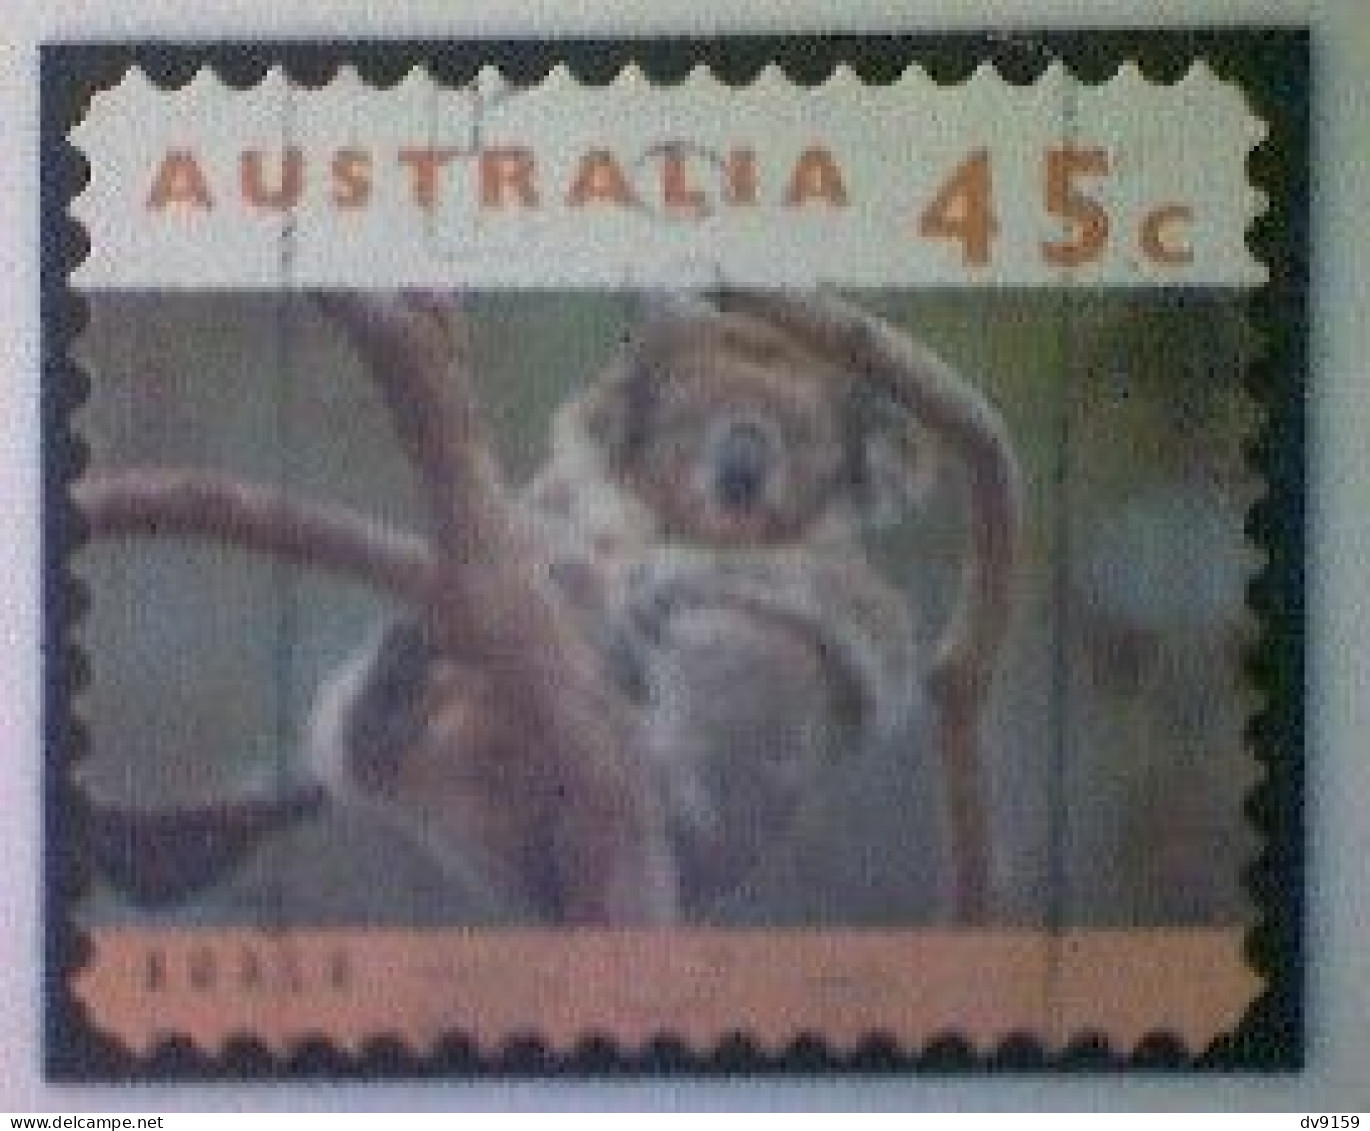 Australia, Scott #1293, Used (o), 1994, Wildlife Series, Koala Sleeping, 45¢, Orange And Multicolored - Gebruikt